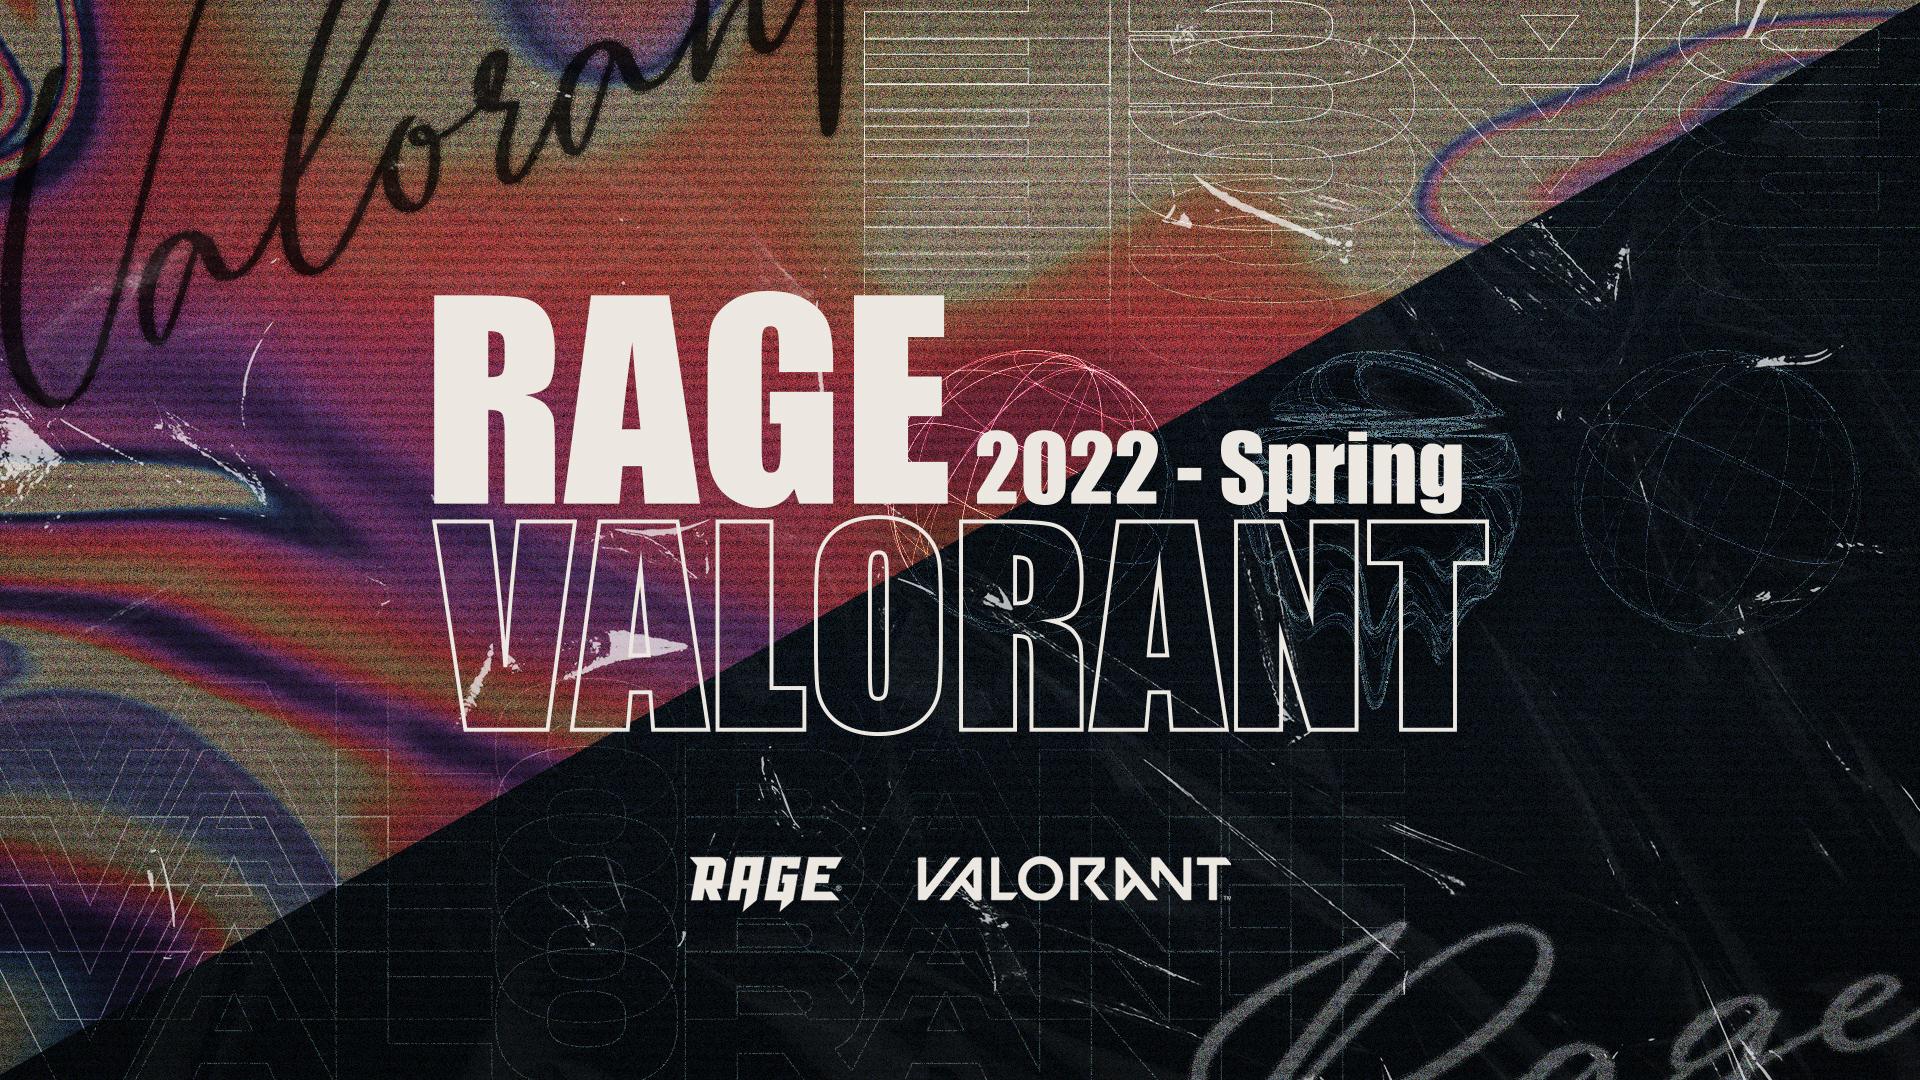 RAGE VALORANT 2022 Spring feature image